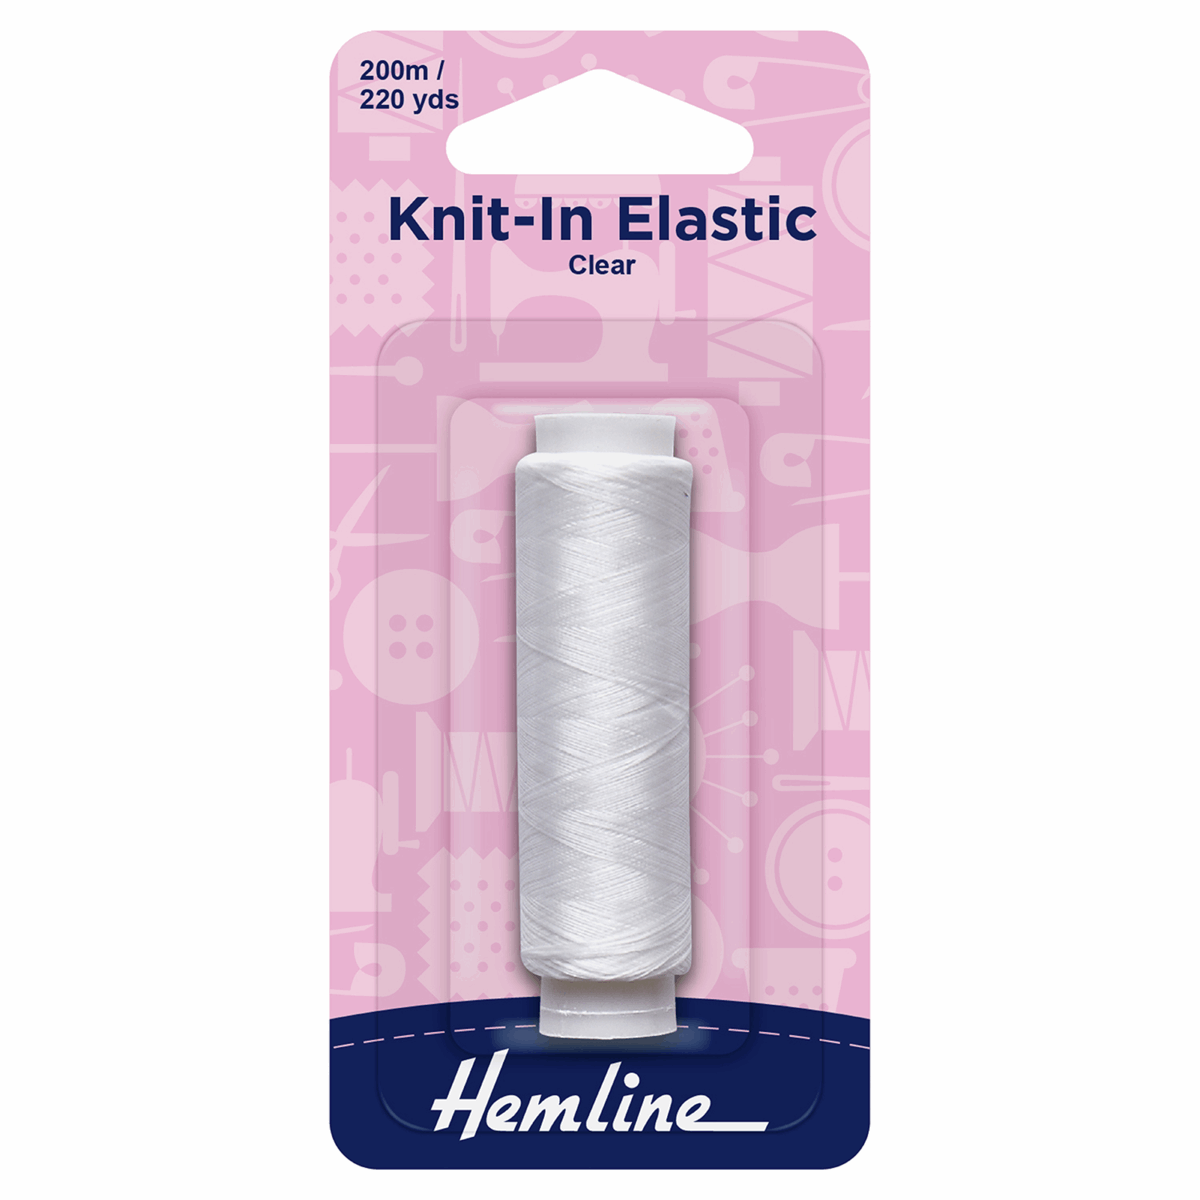 Hemline Knit-In Elastic - 200m